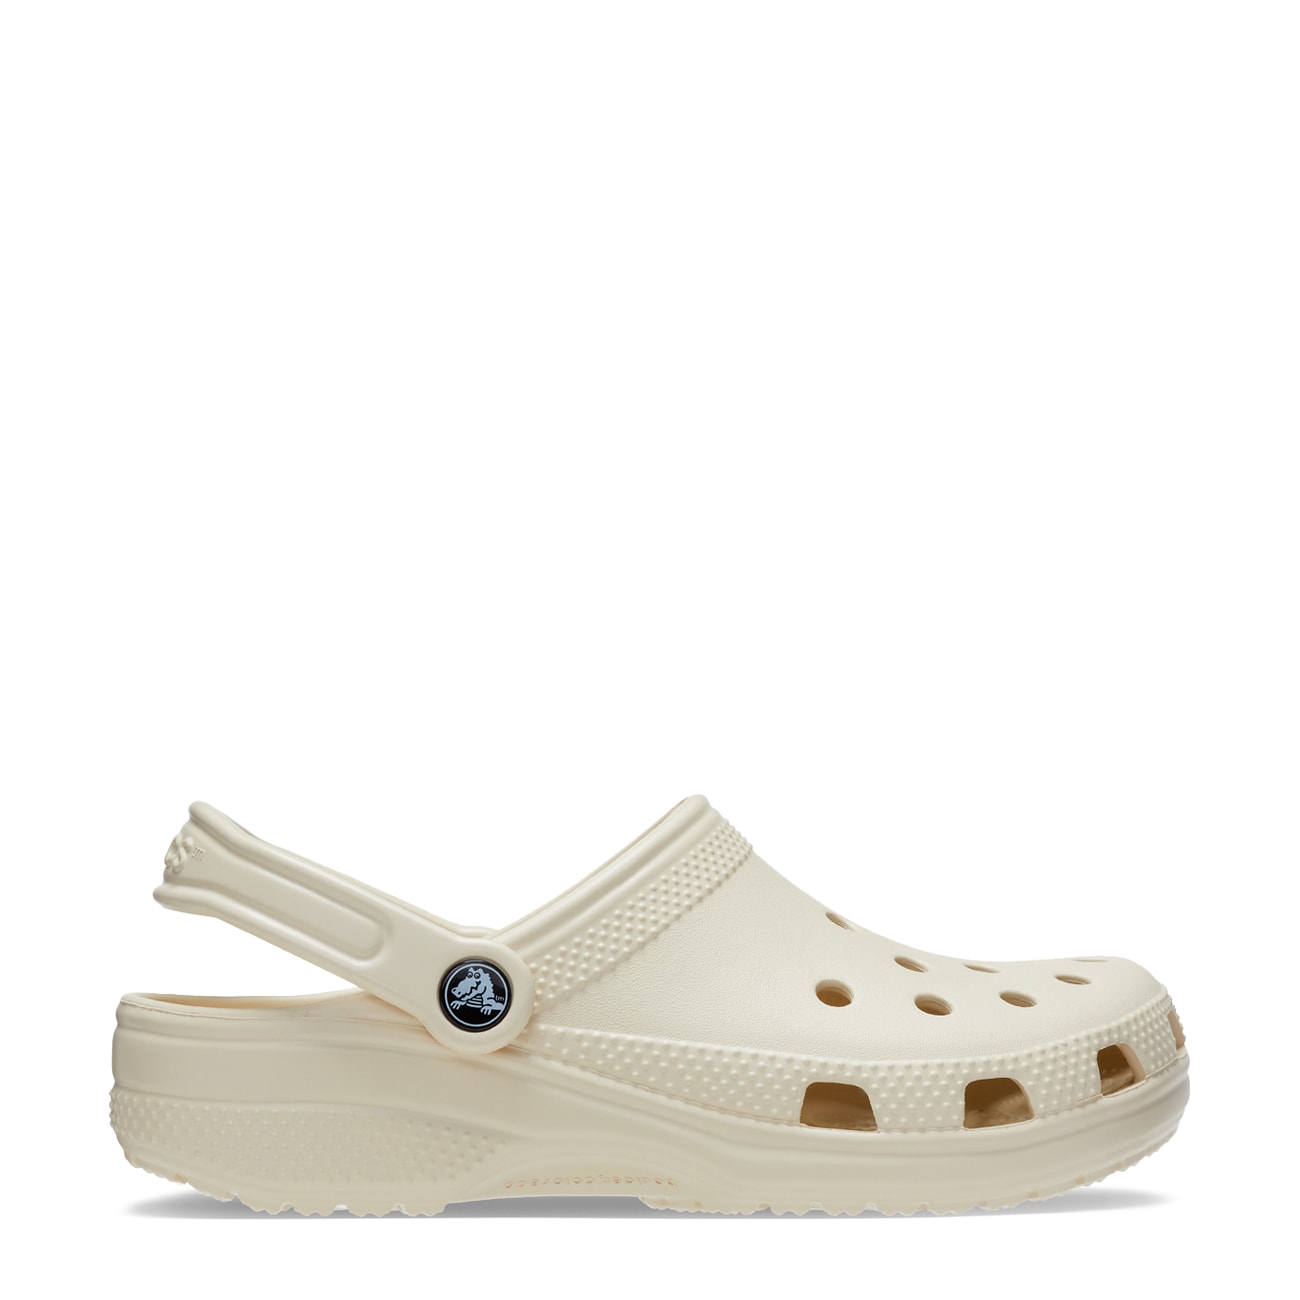 Crocs Classic Clog Lifestyle Shoe